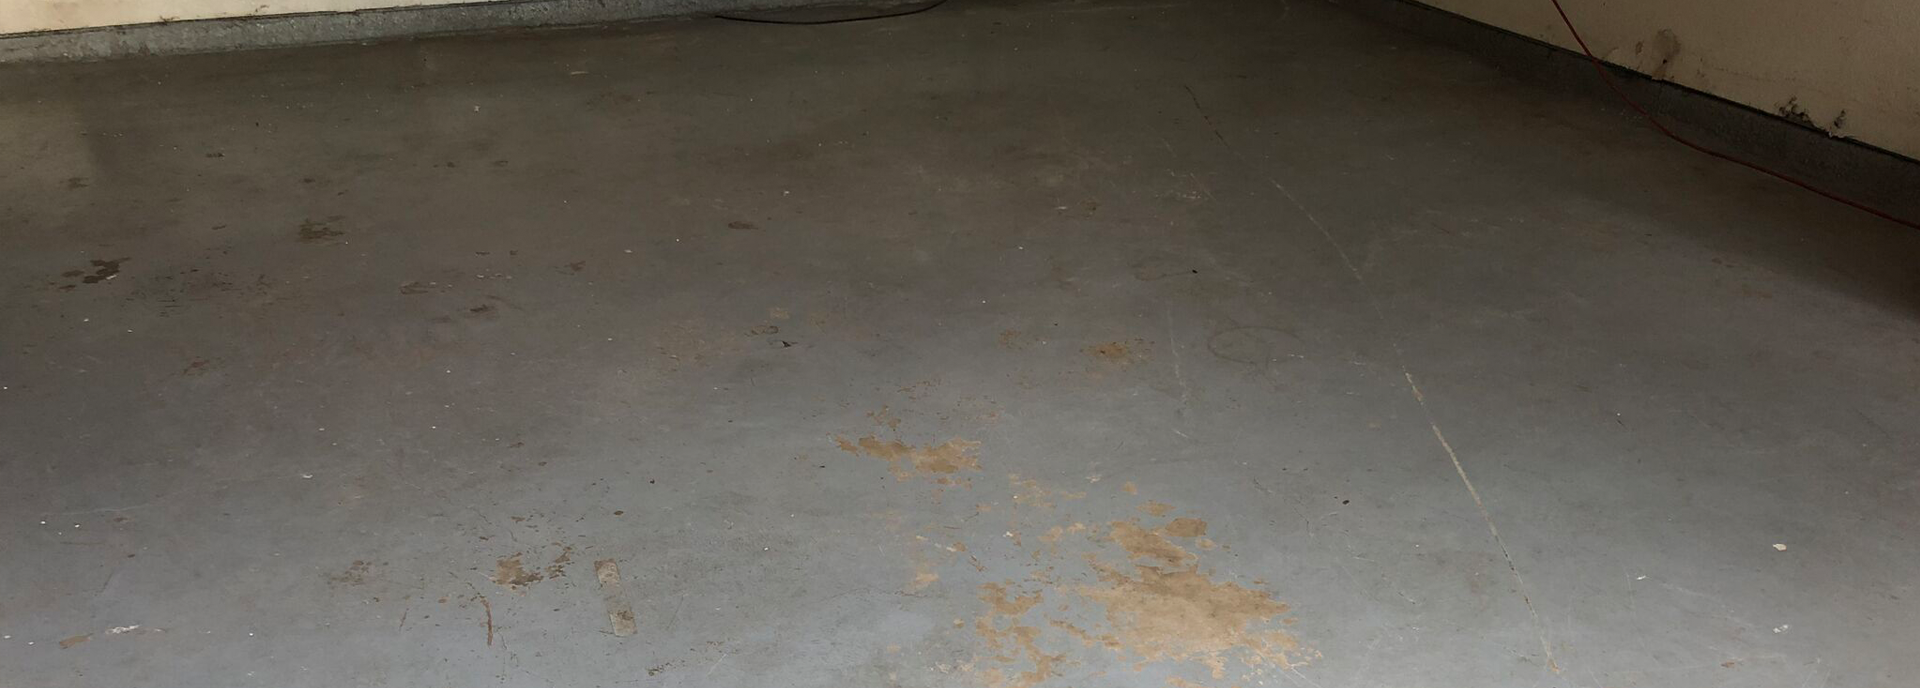 Epoxy Garage Floor Before